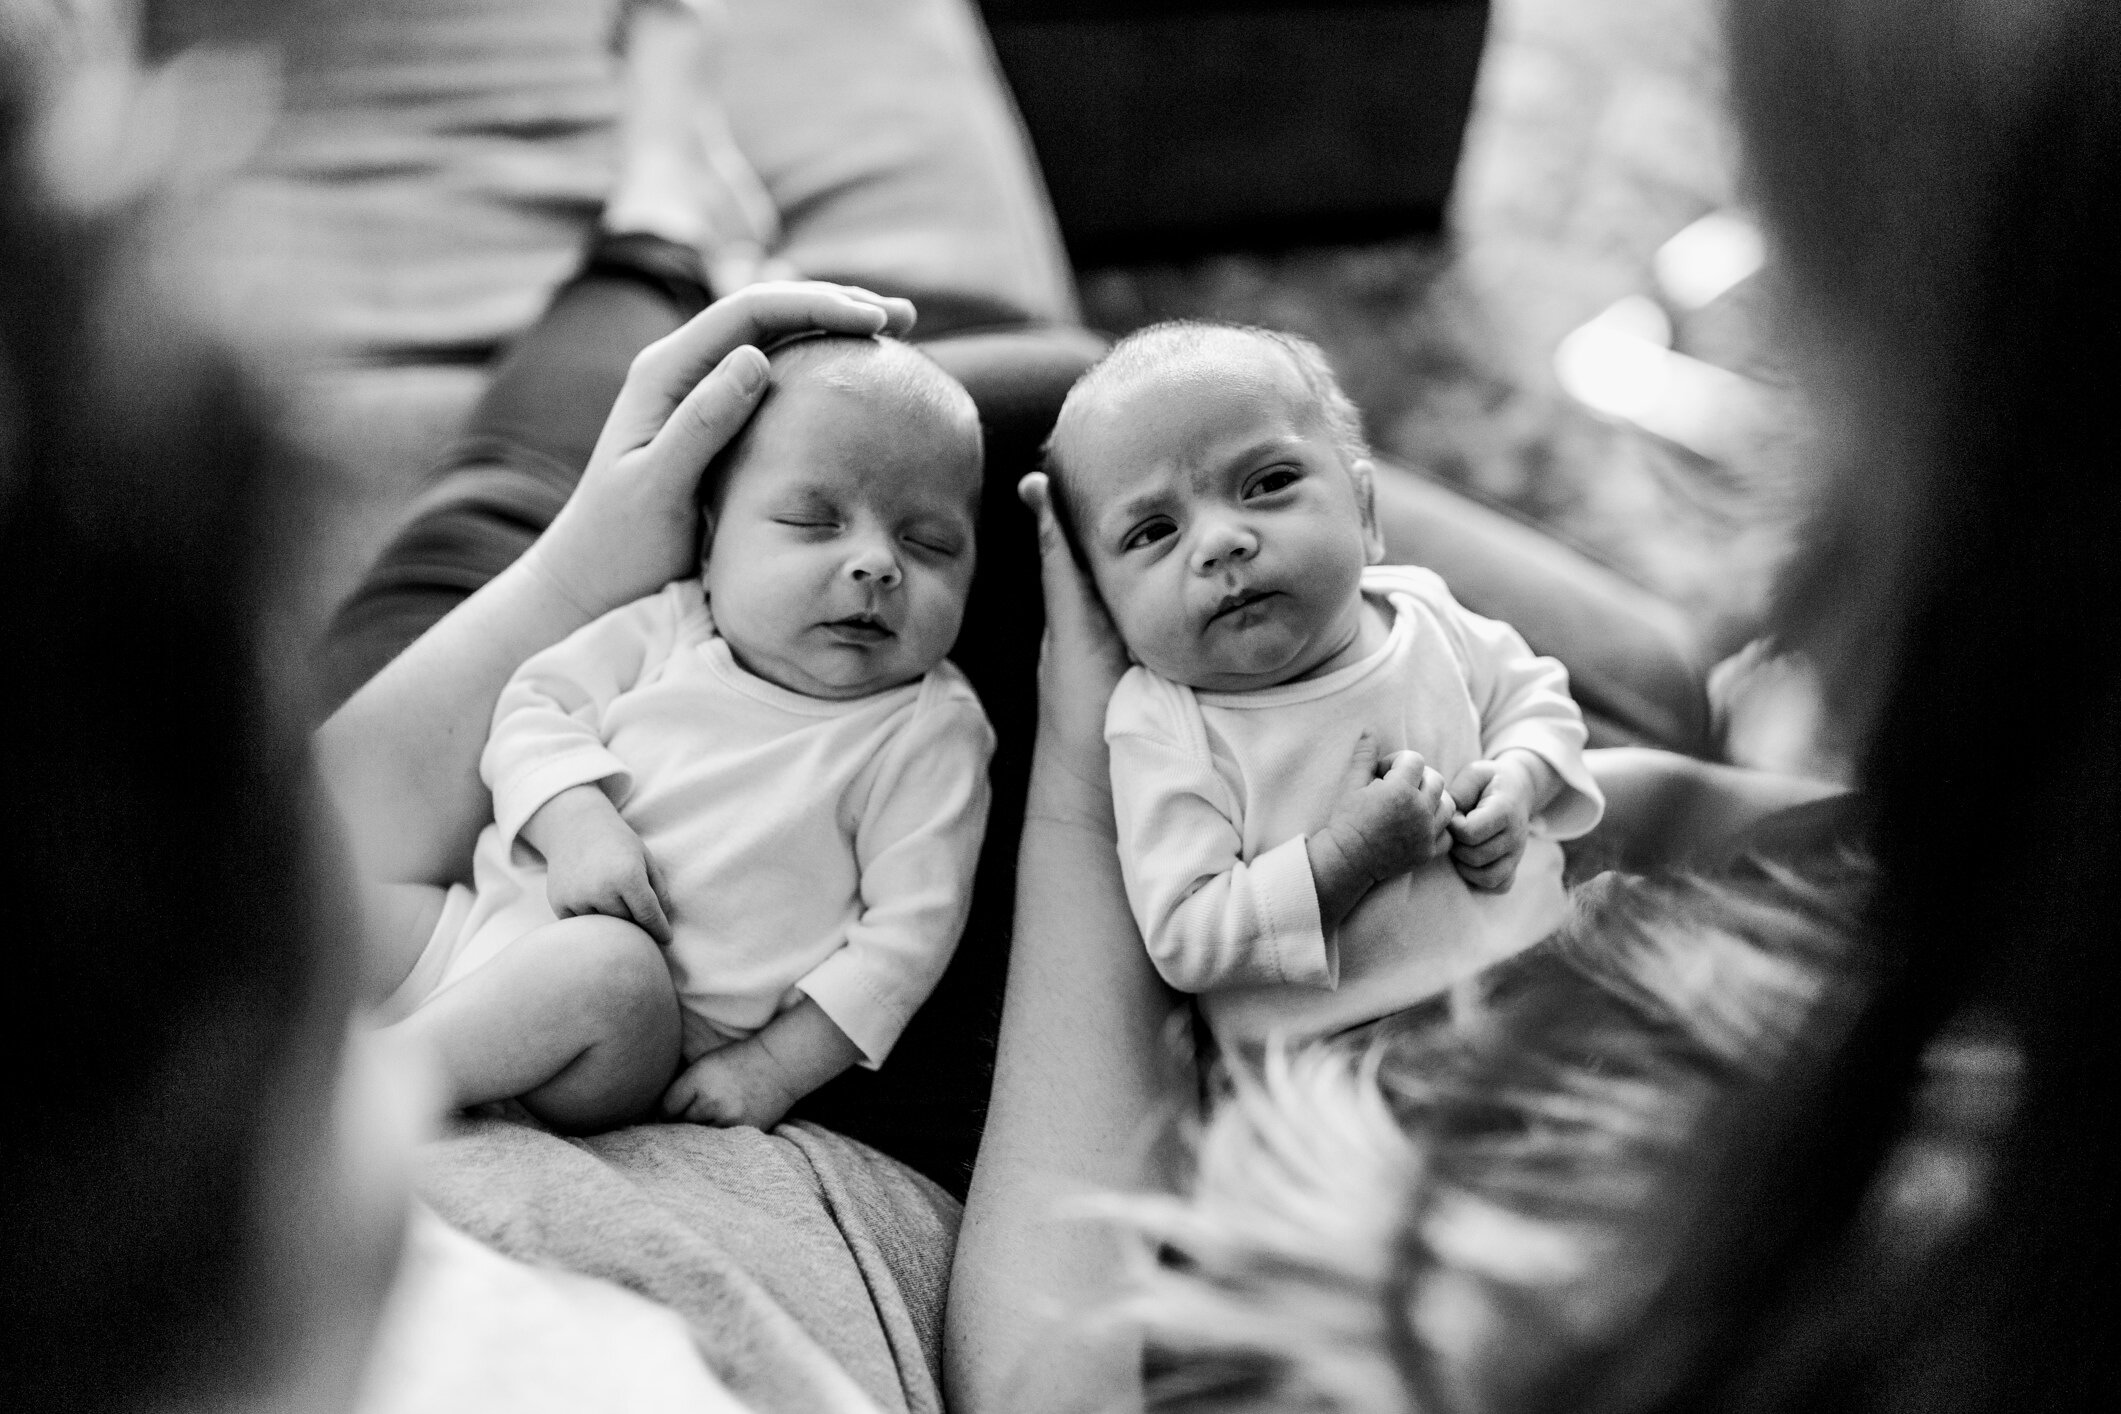 louisville-newborn-photography-lgbtq-family-photos (45 of 75).jpg